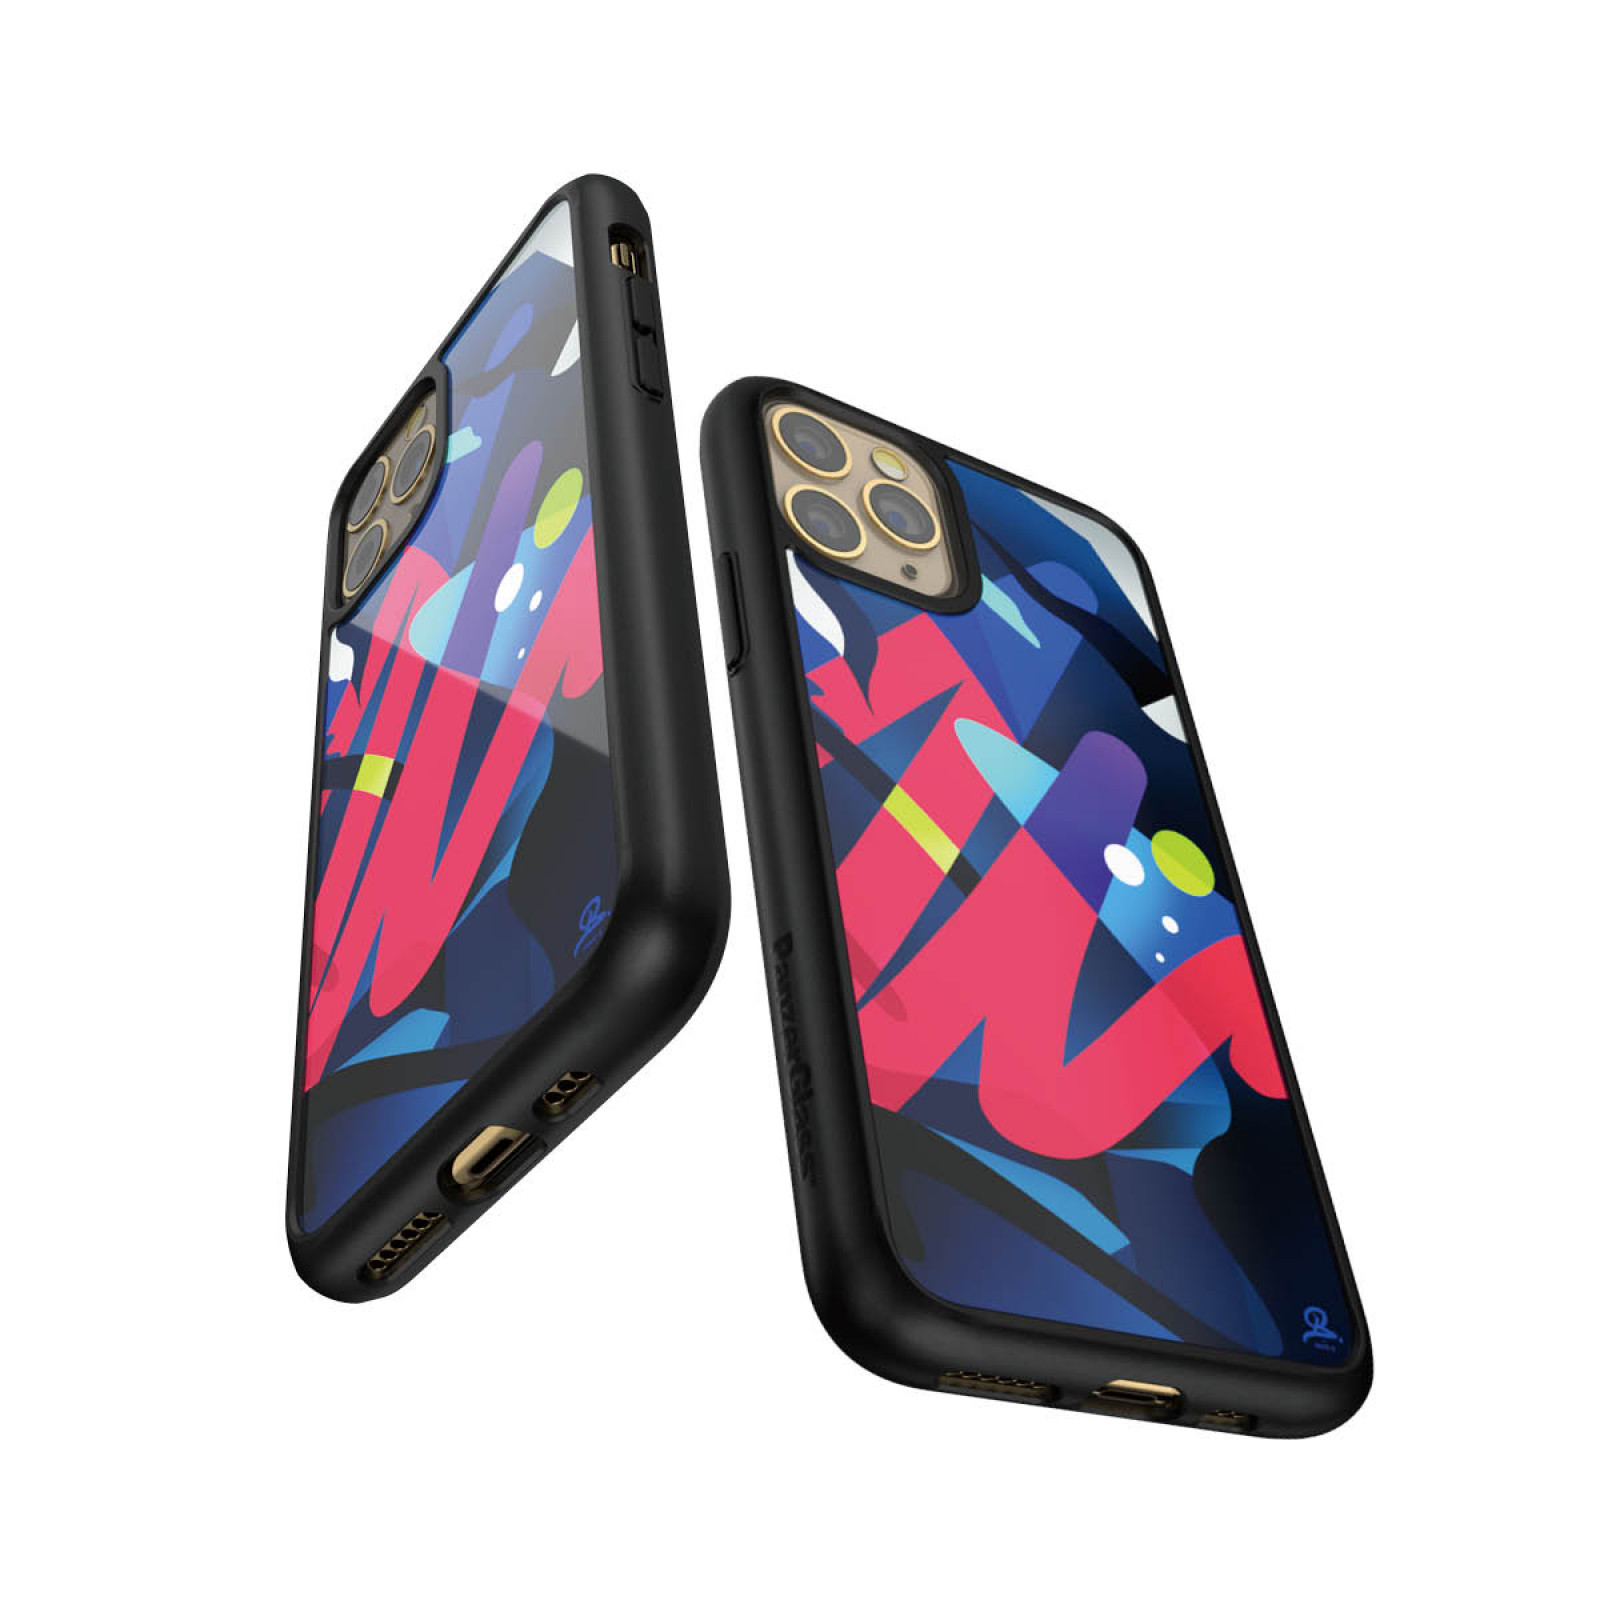 Гръб PanzerGlass Artist Edition ClearCase за Iphone 11 Pro Max  - Цветен